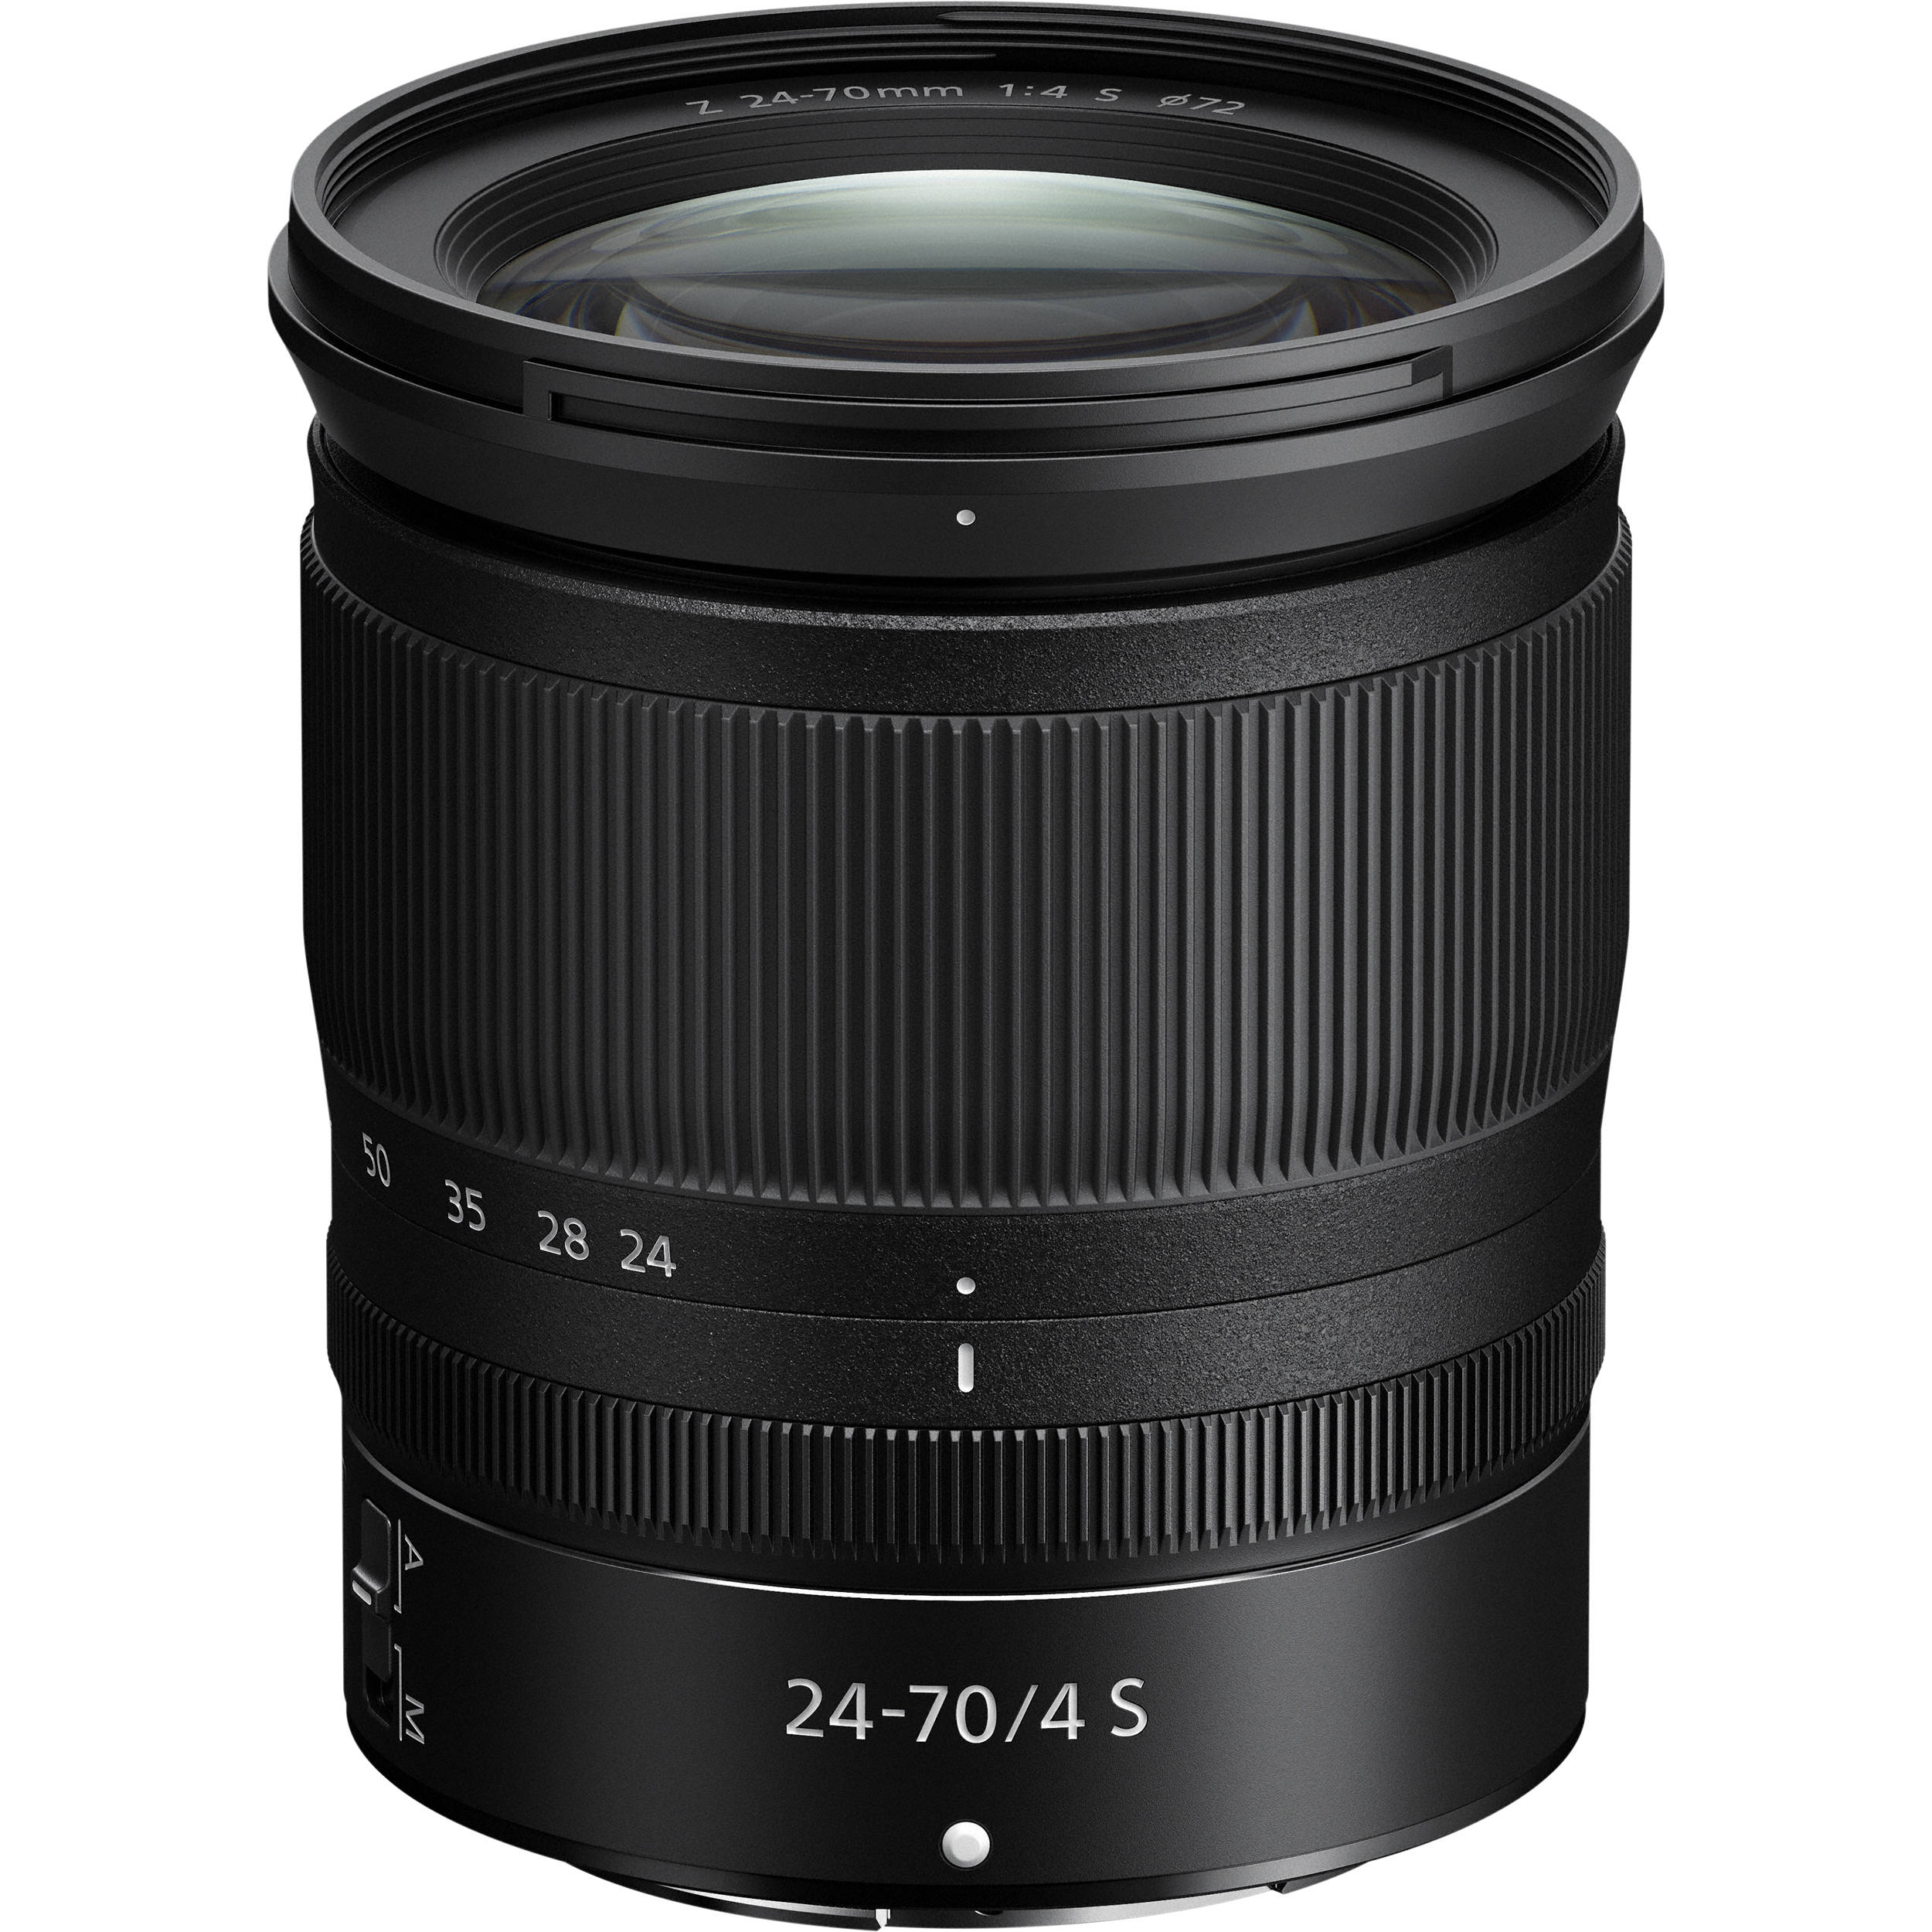 Nikon NIKKOR Z 24-70mm f.4 S Lens (Intl Model) + 4.5 inch Vivitar Premium Lens Case + Cleaning Kit